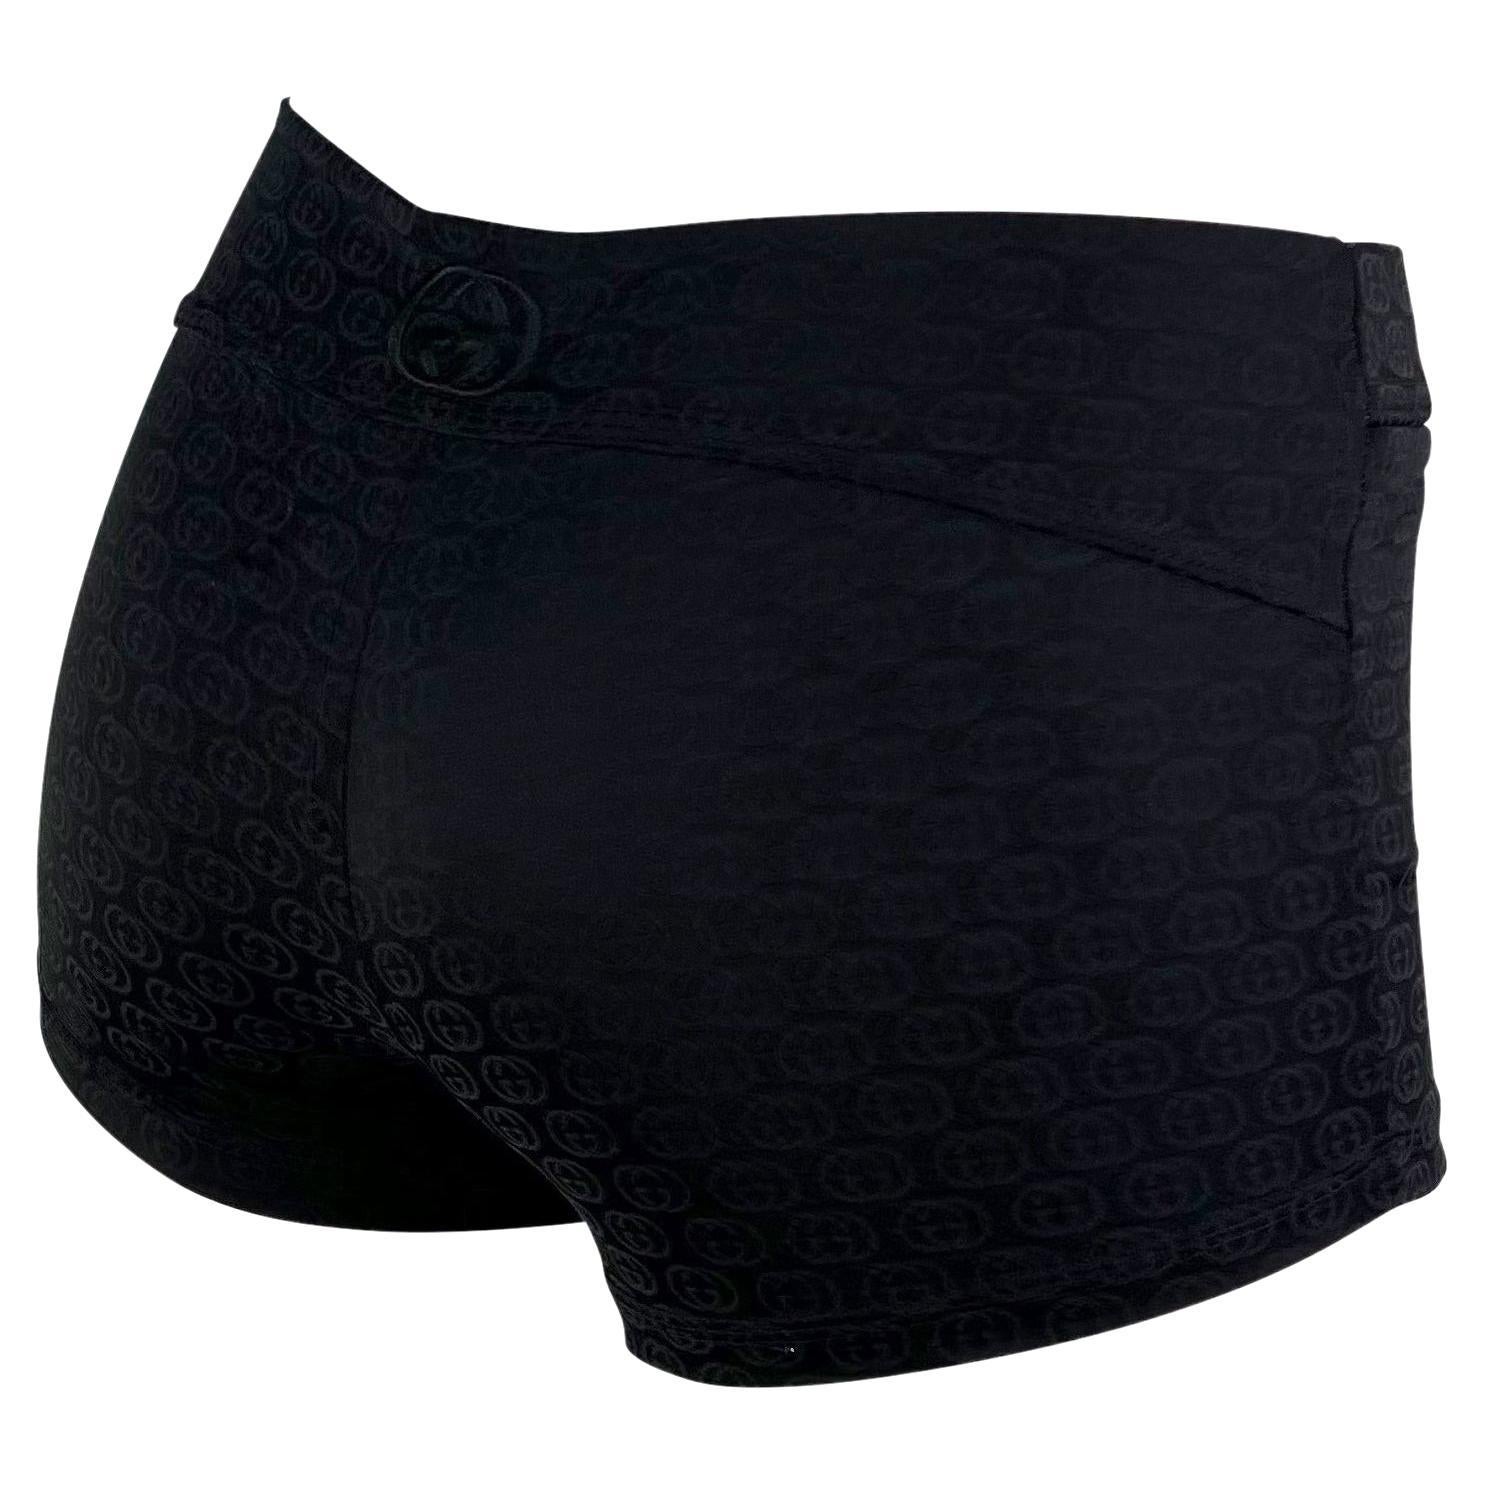 S/S 2003 Gucci by Tom Ford GG Monogram Stretch Swim Black Hot Pants Shorts